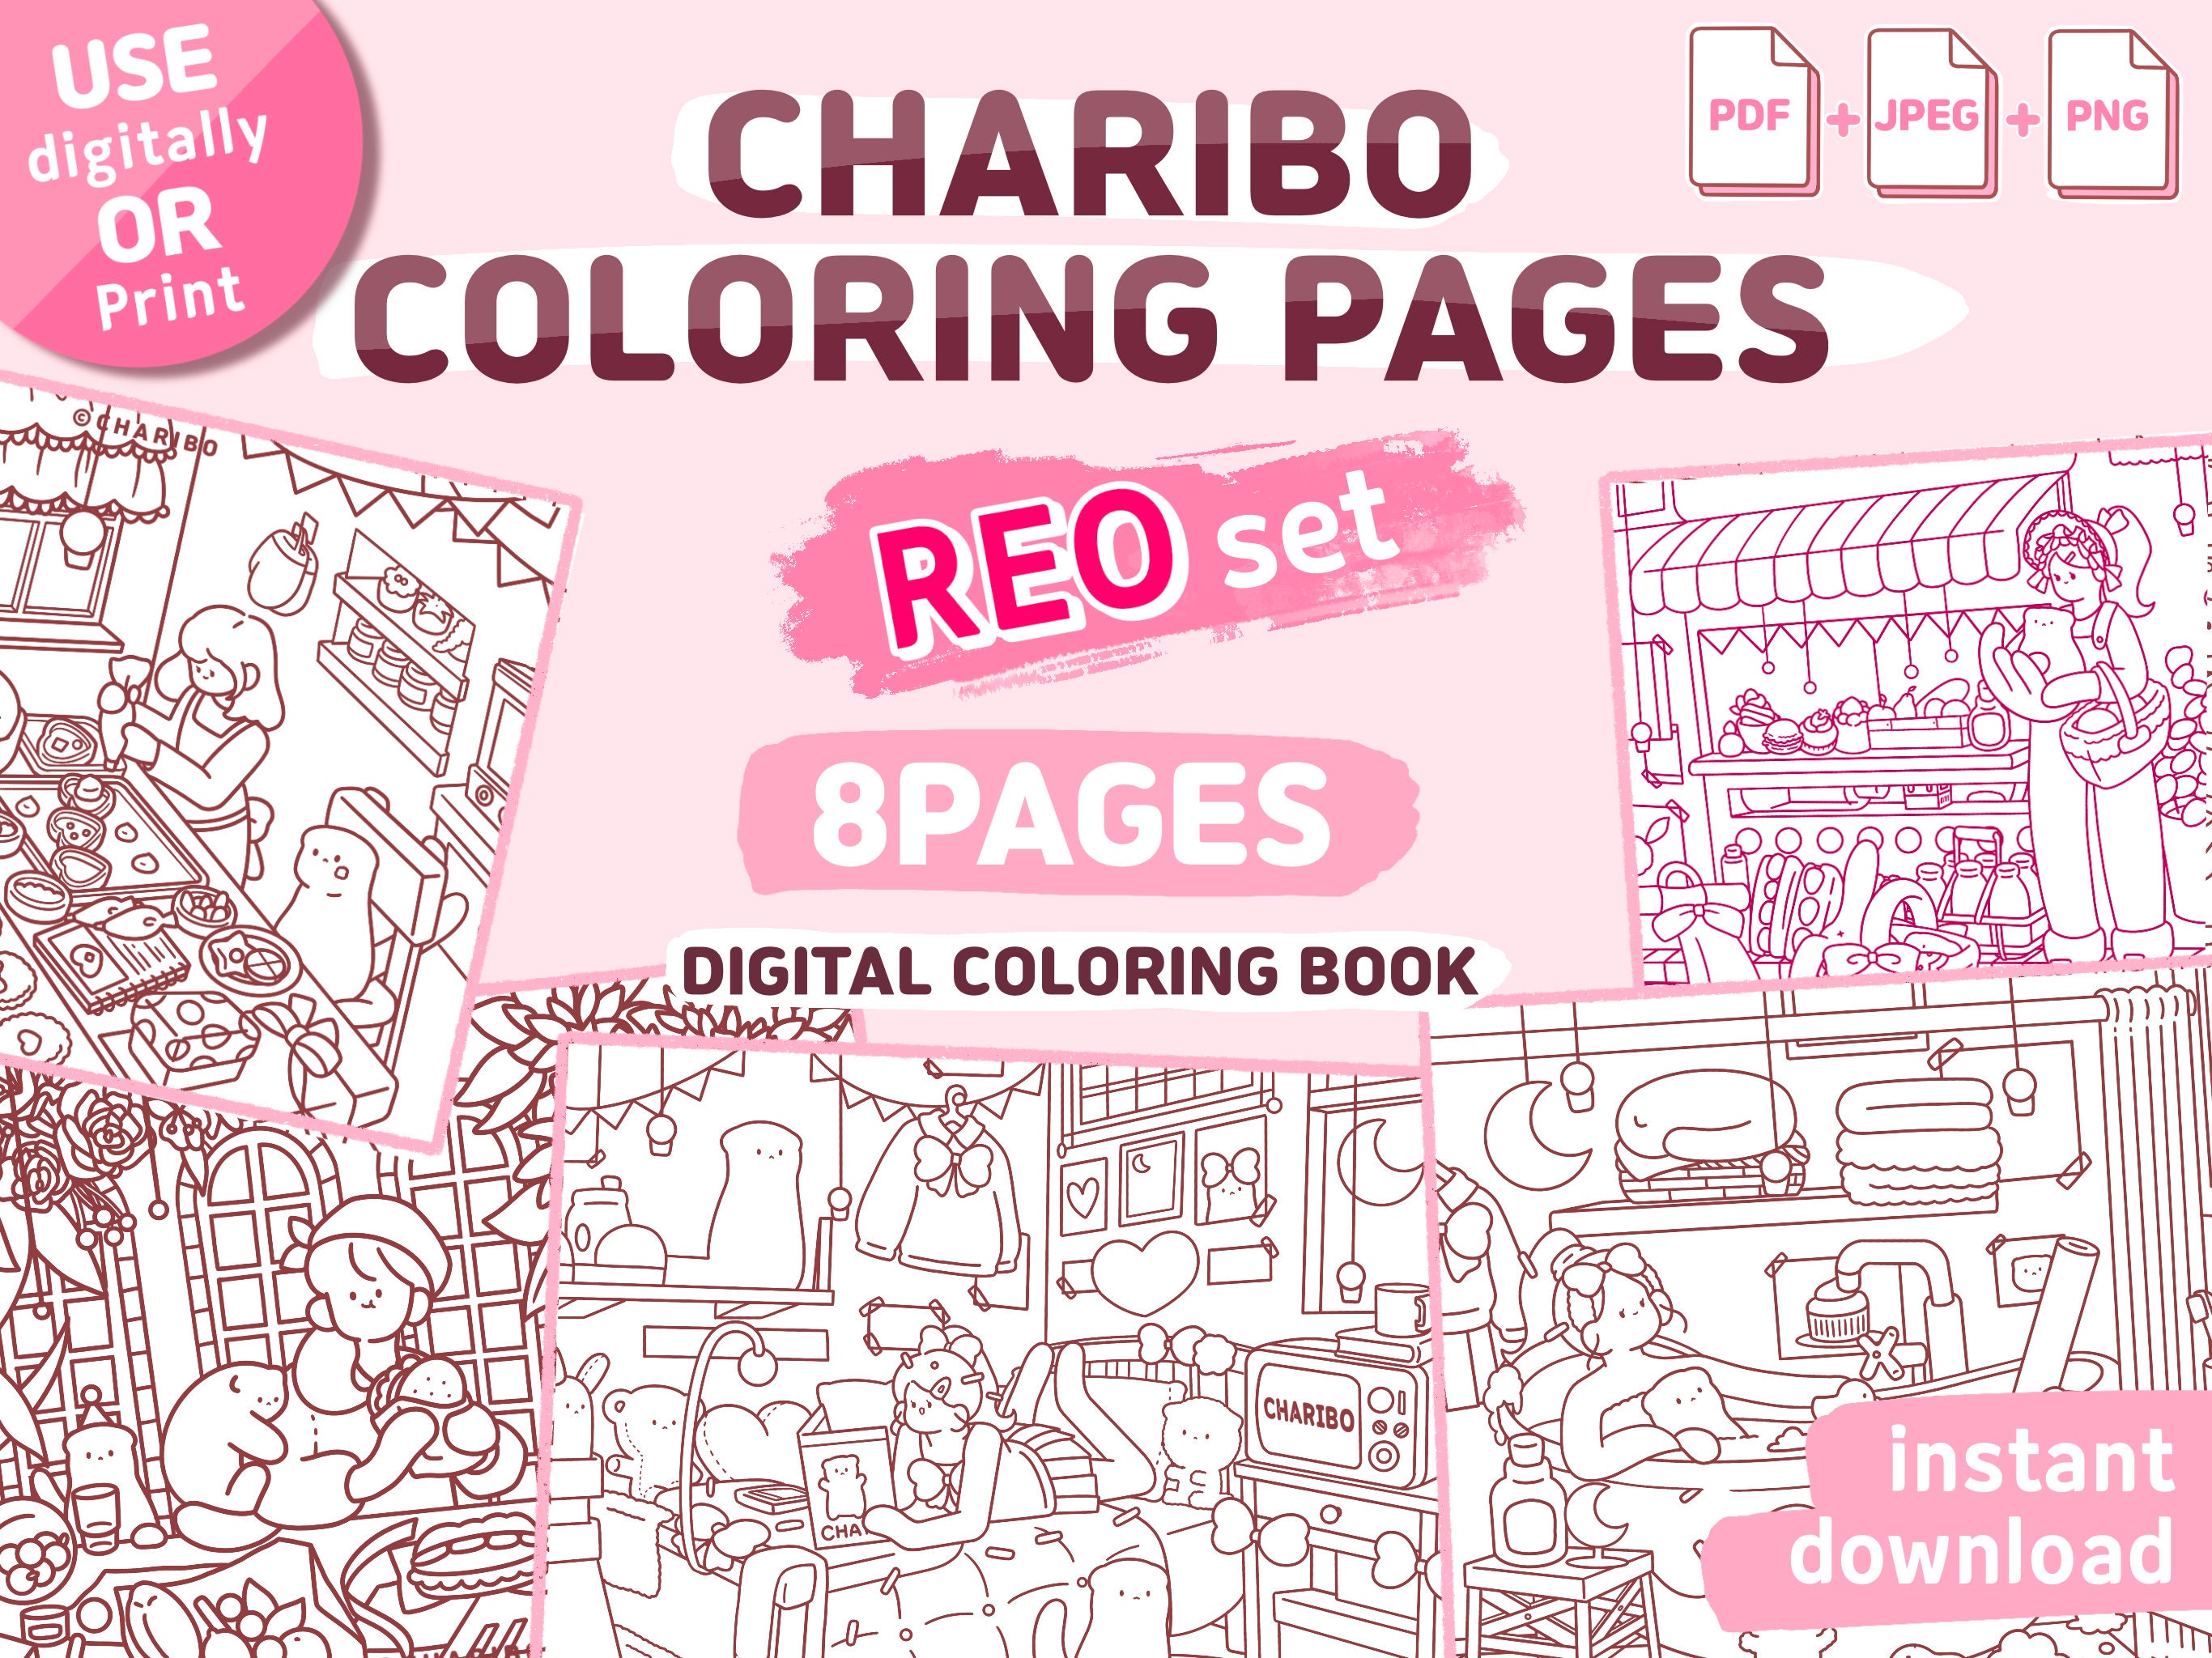 Charibo art reo set coloring book printable coloring pages adult coloring sheet kids coloring sheet coloring template